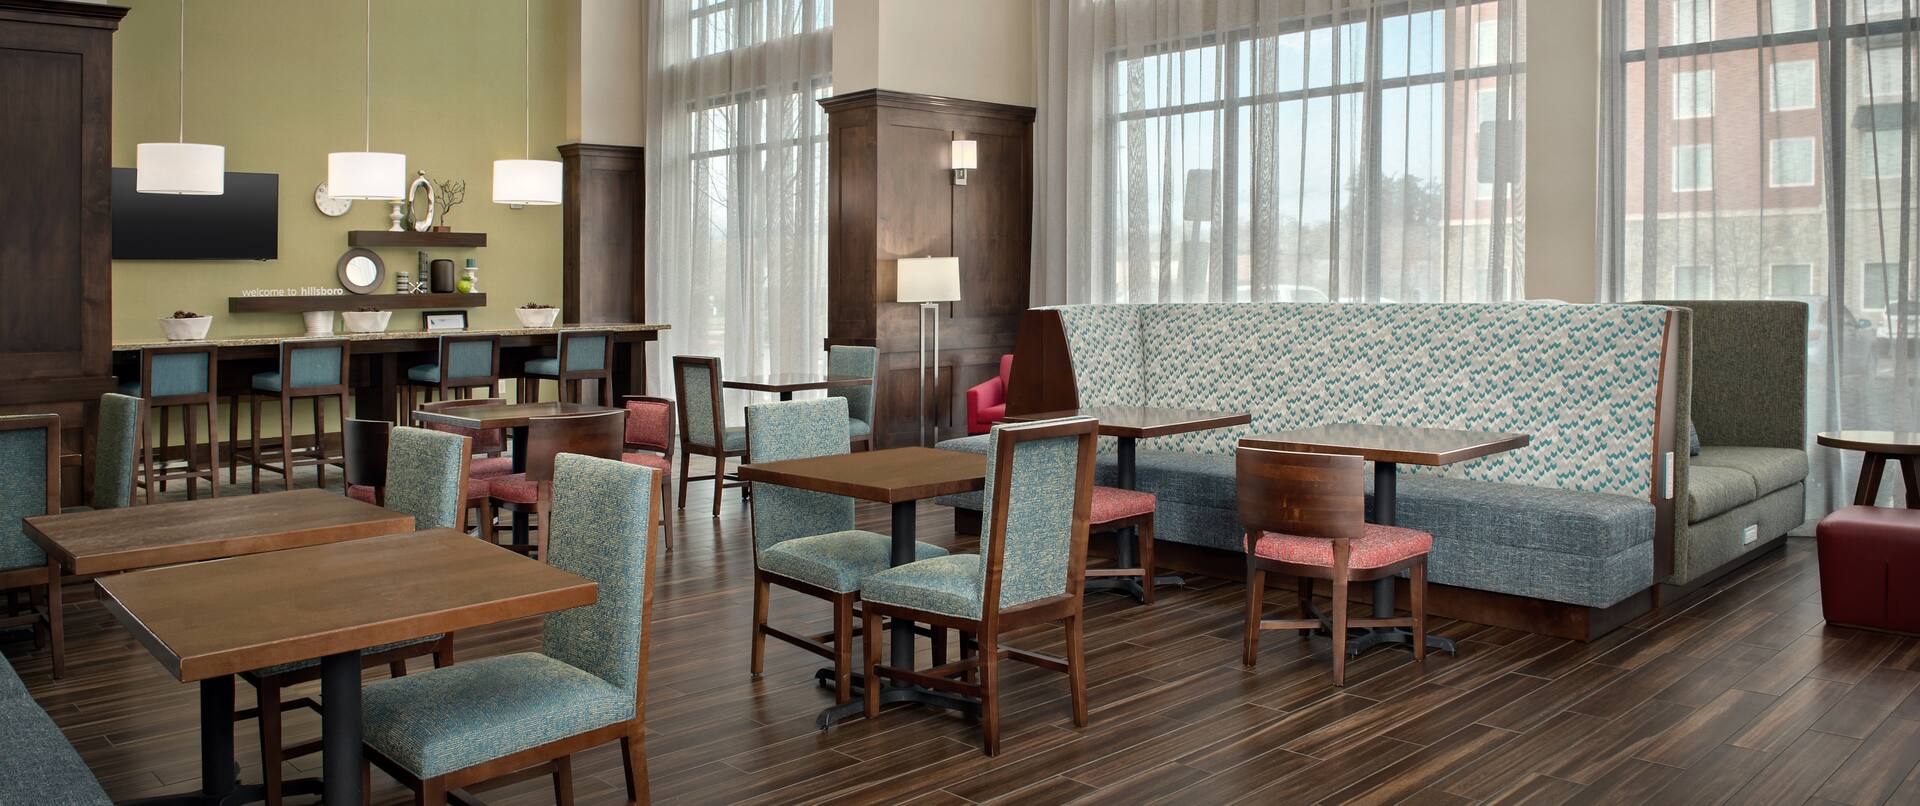 hotel lobby, breakfast dining area